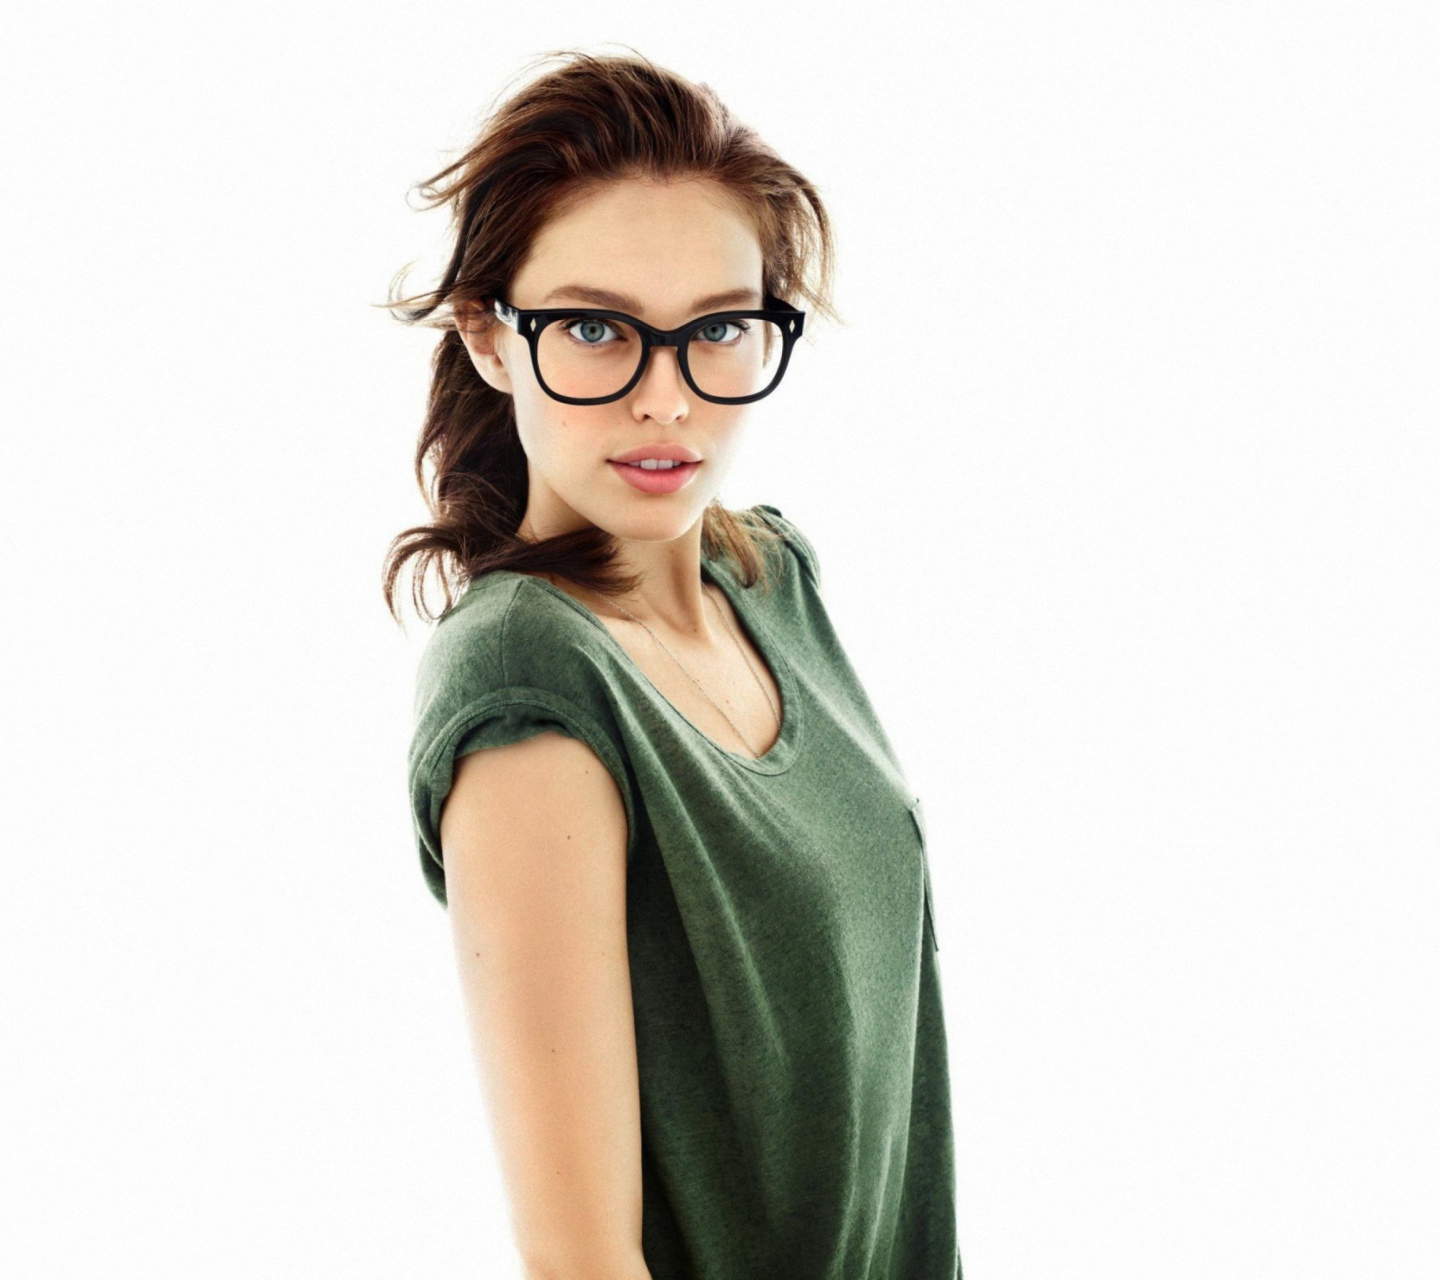 Very Cute Girl In Big Glasses wallpaper 1440x1280